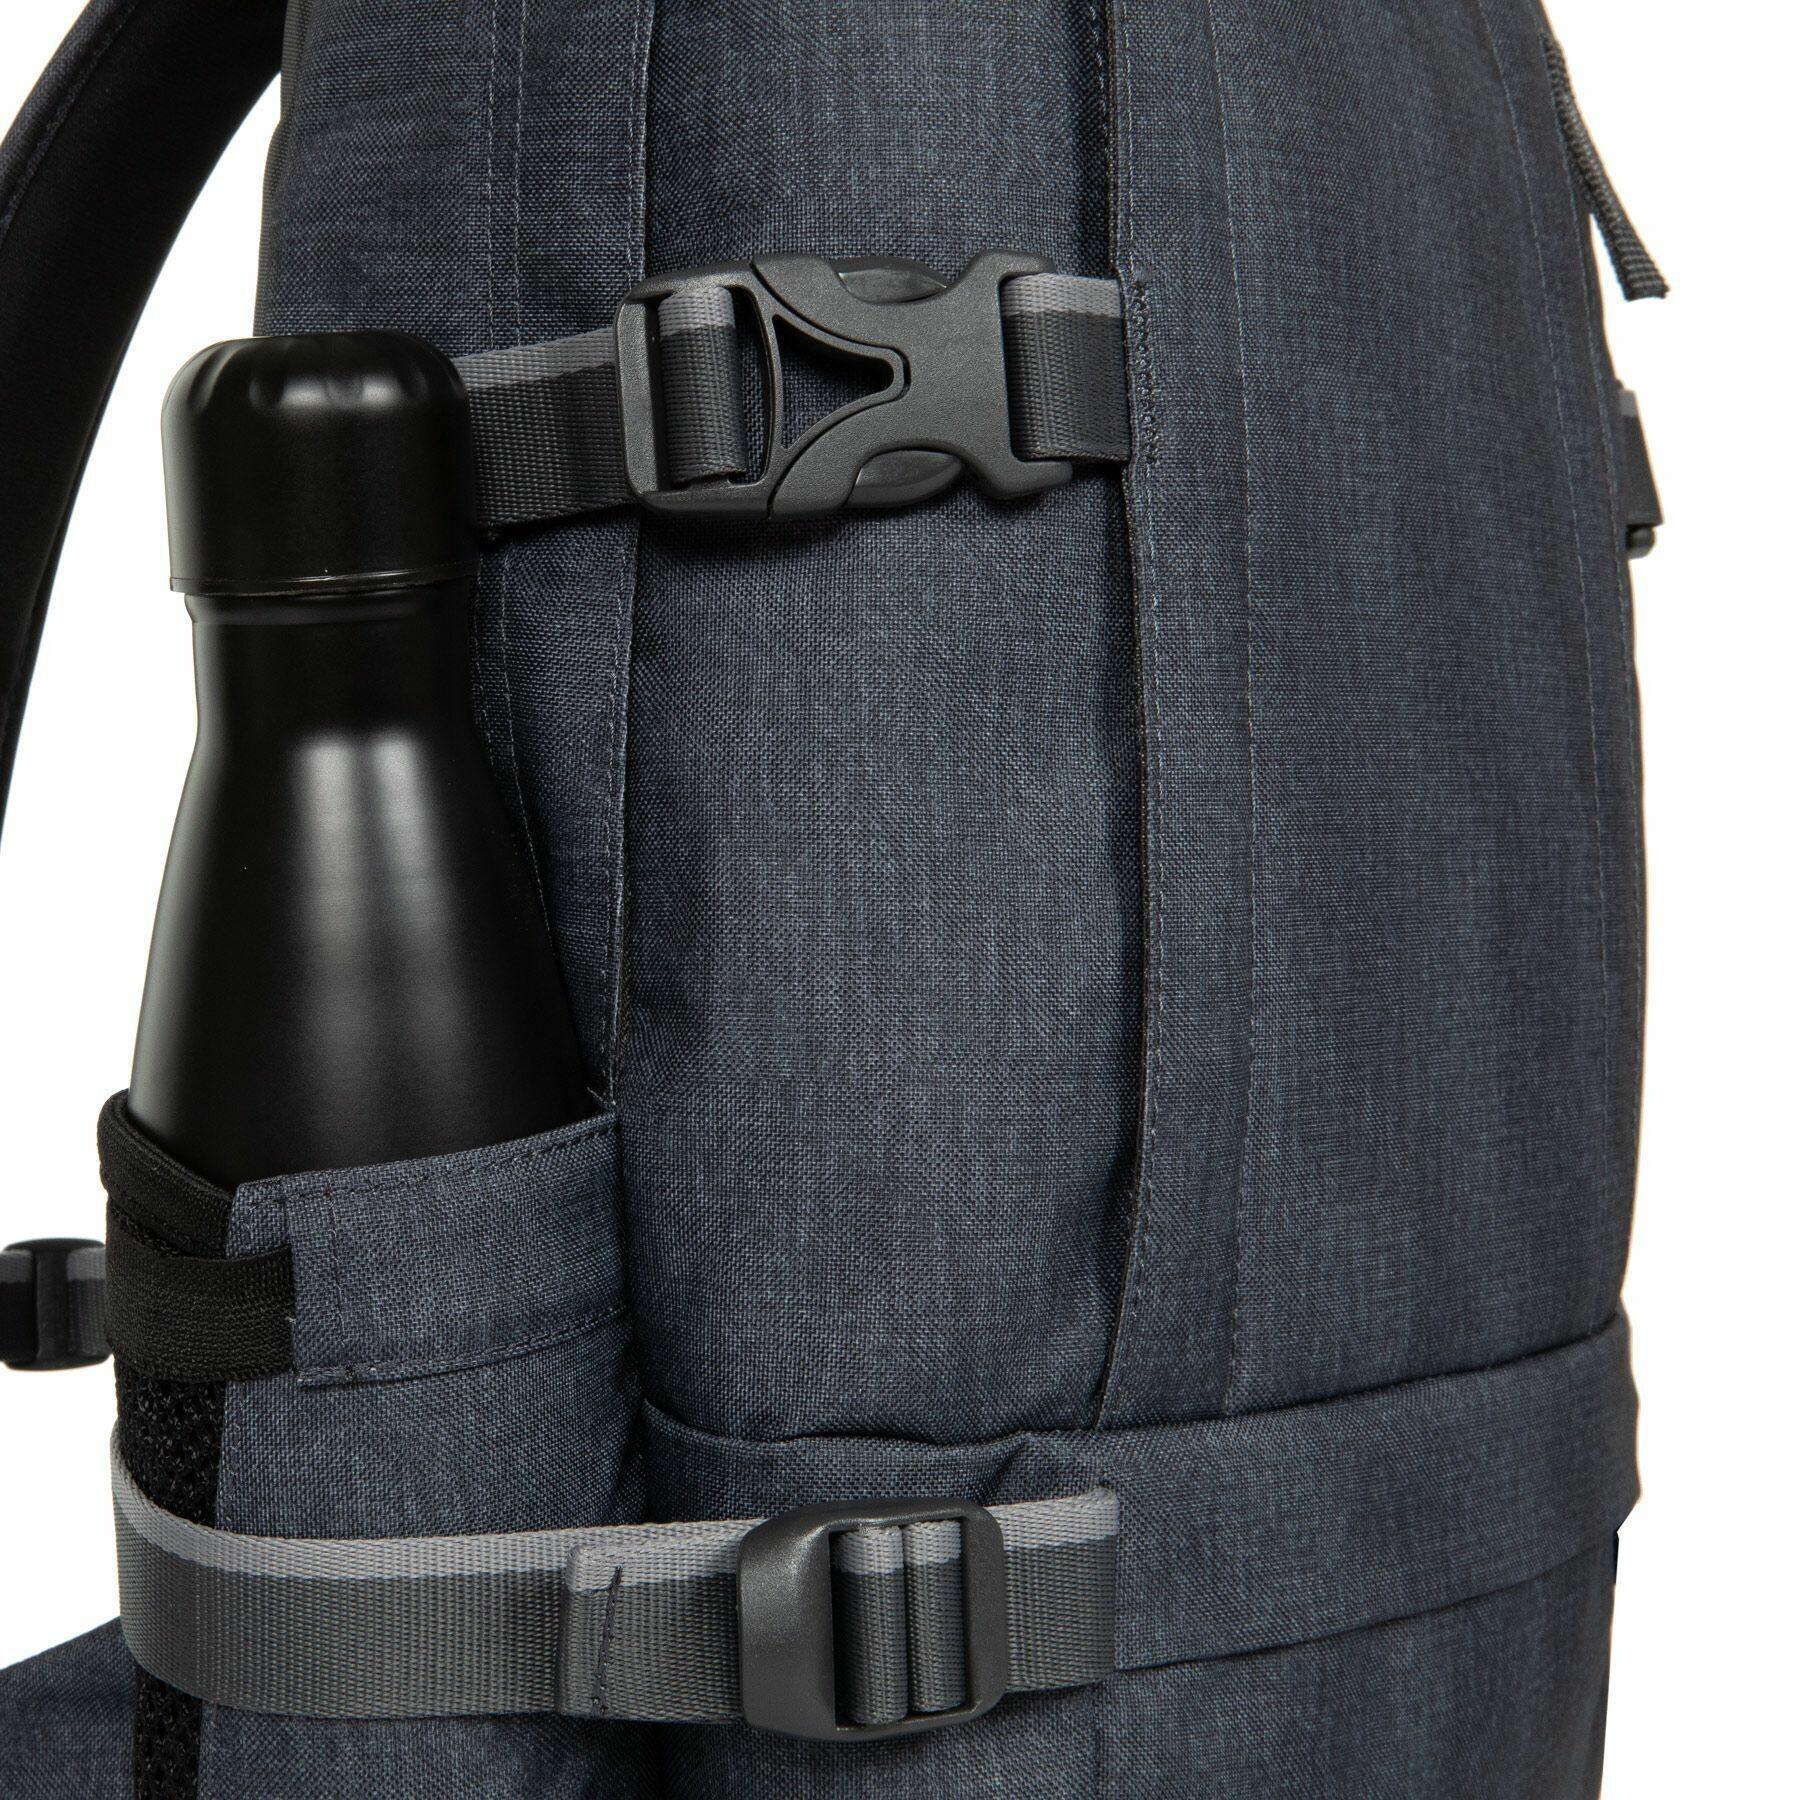 Backpack Eastpak Floid U86 Core Series